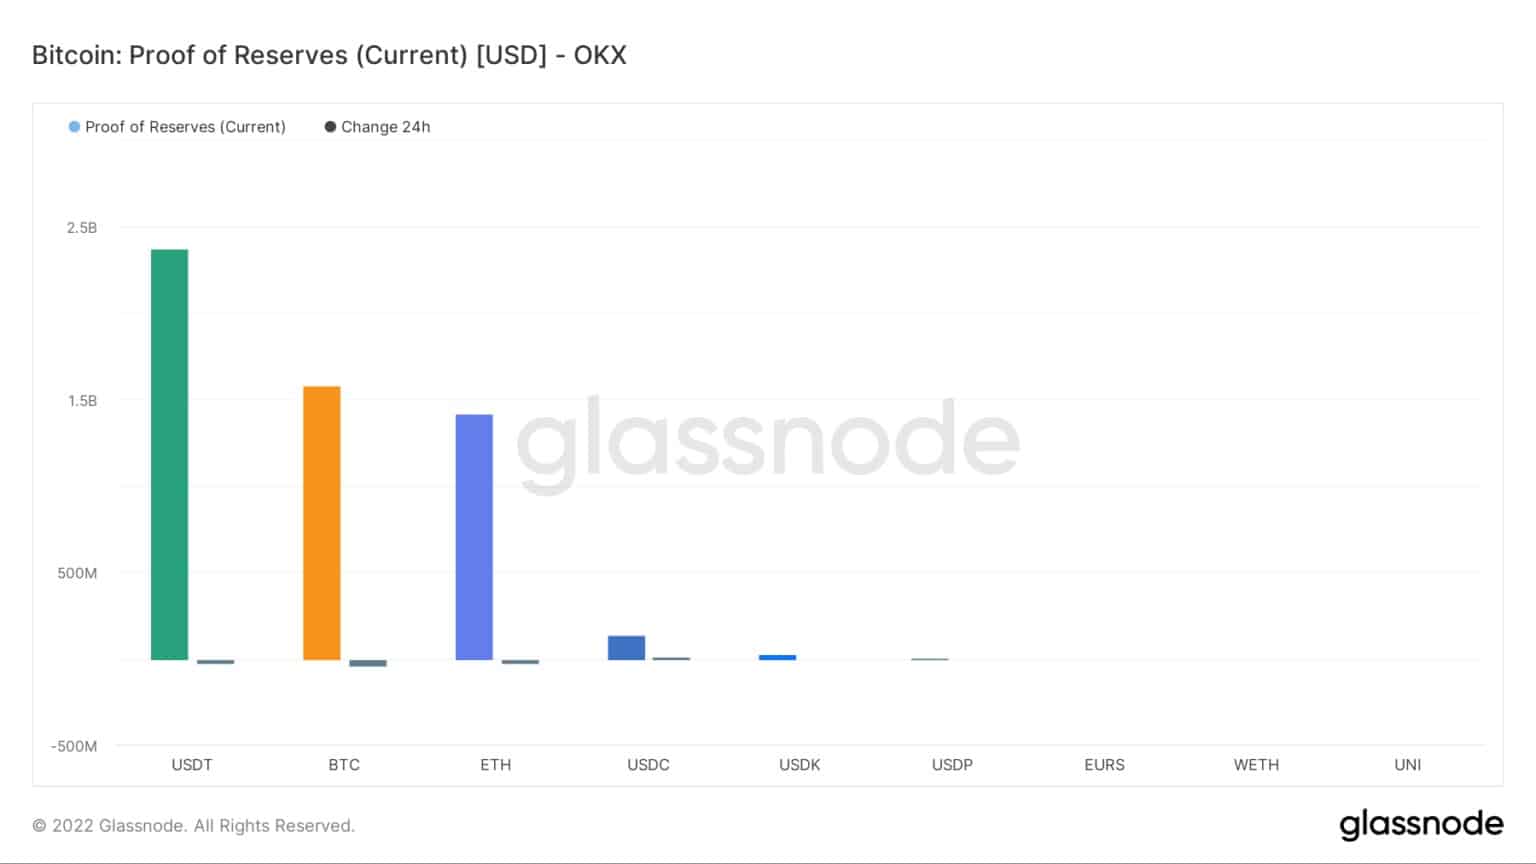 Proof of reserves - OKX / Source: Glassnode